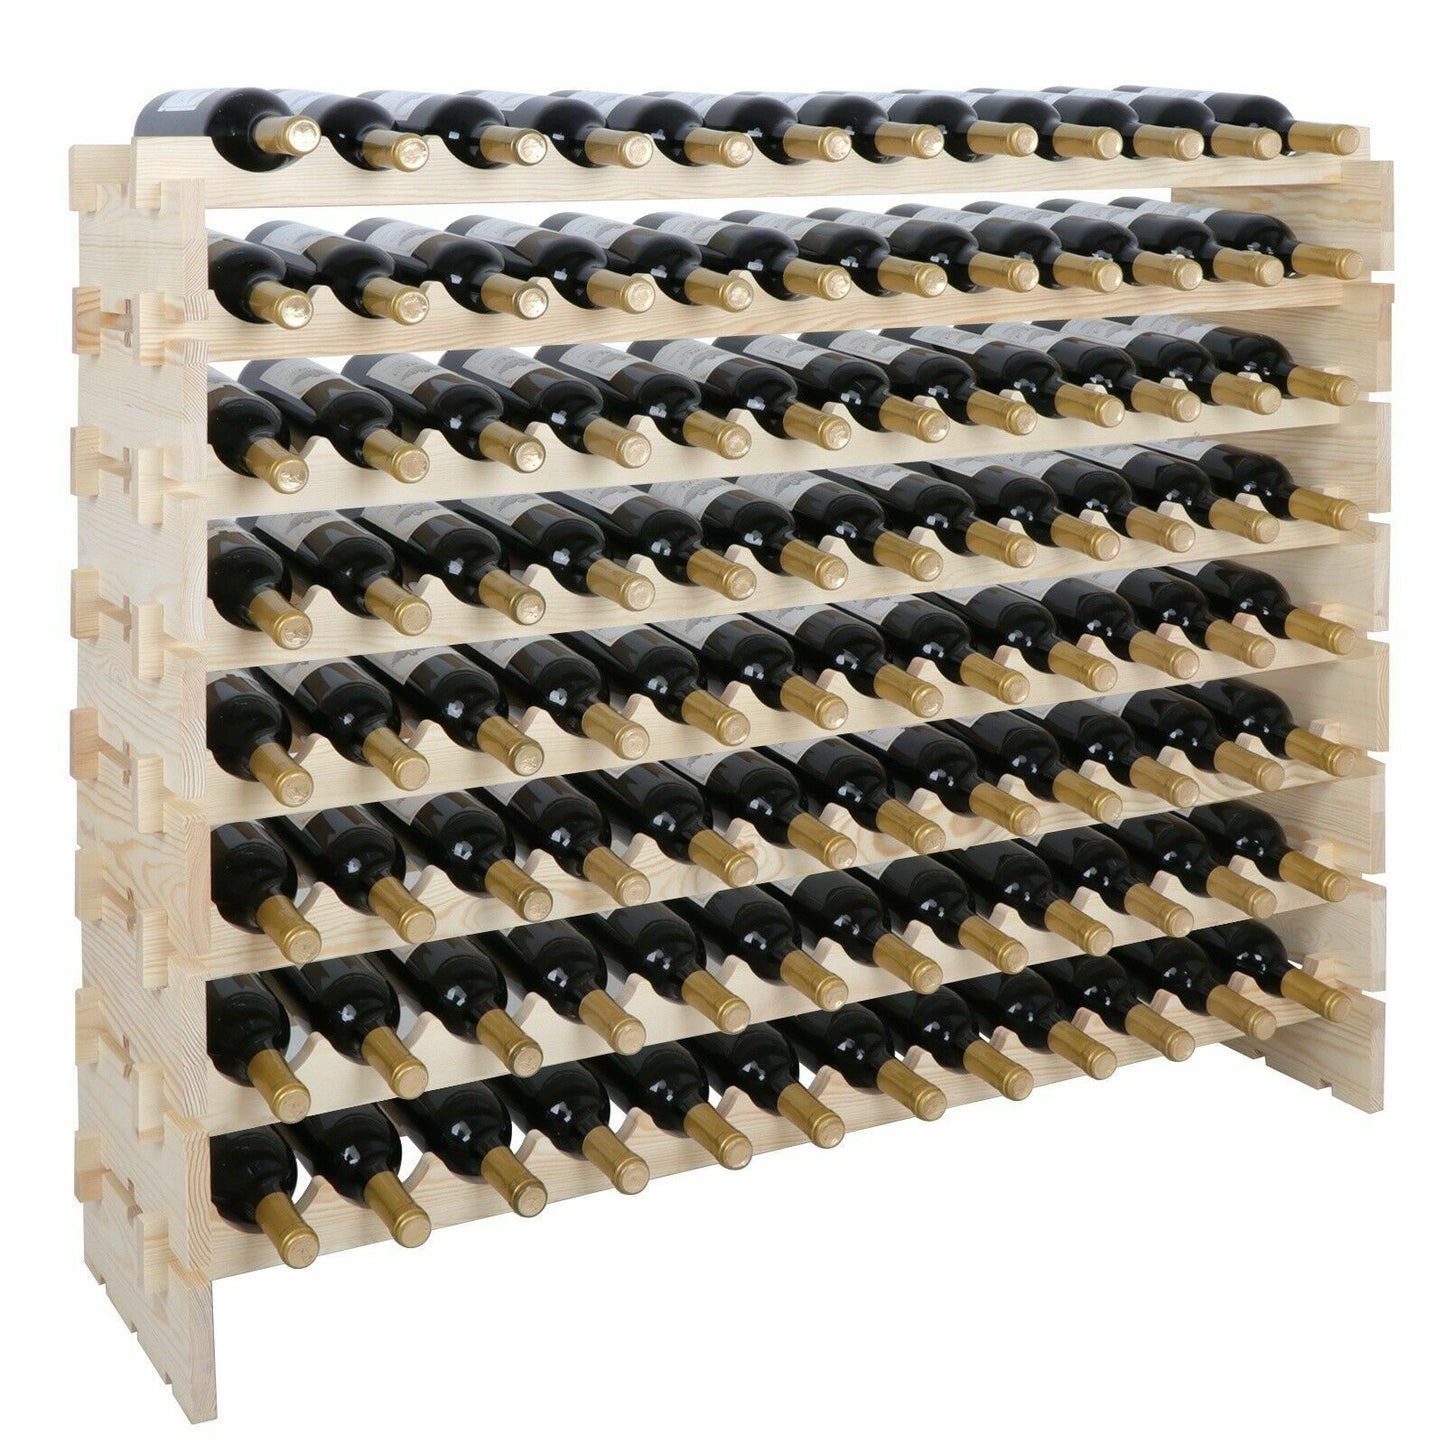 2PCS Stackable Wine Rack 96 Bottles Mount Holder Kitchen Exhibition Organizer